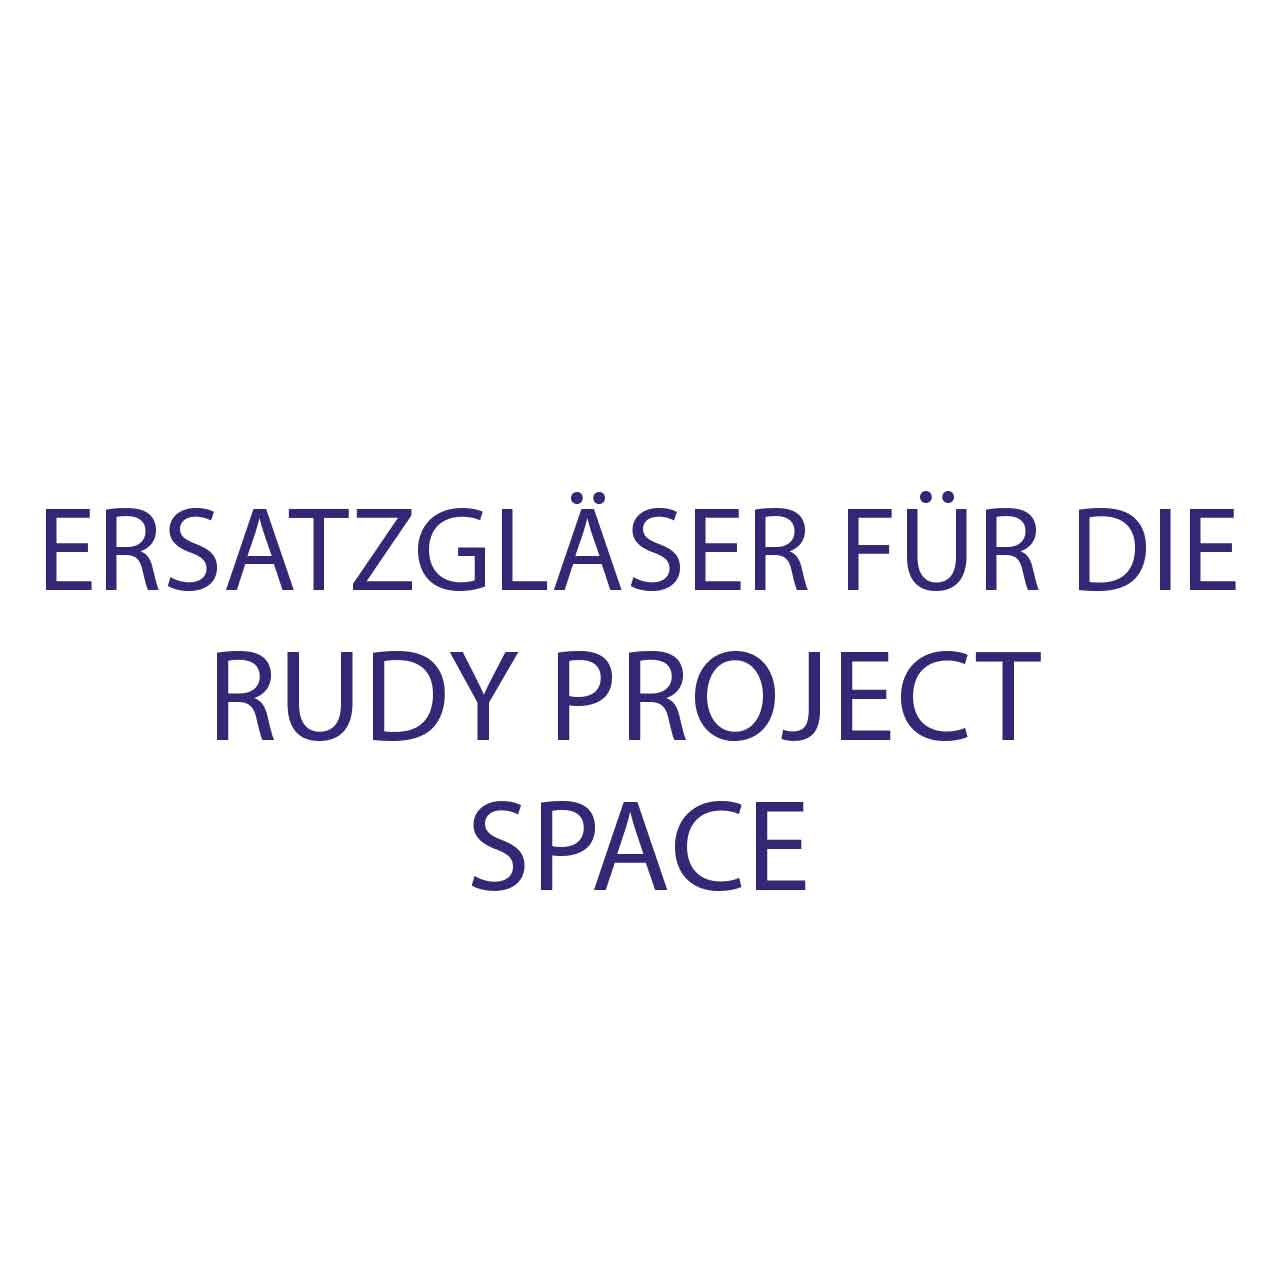 Rudy Project Space Ersatzgläser